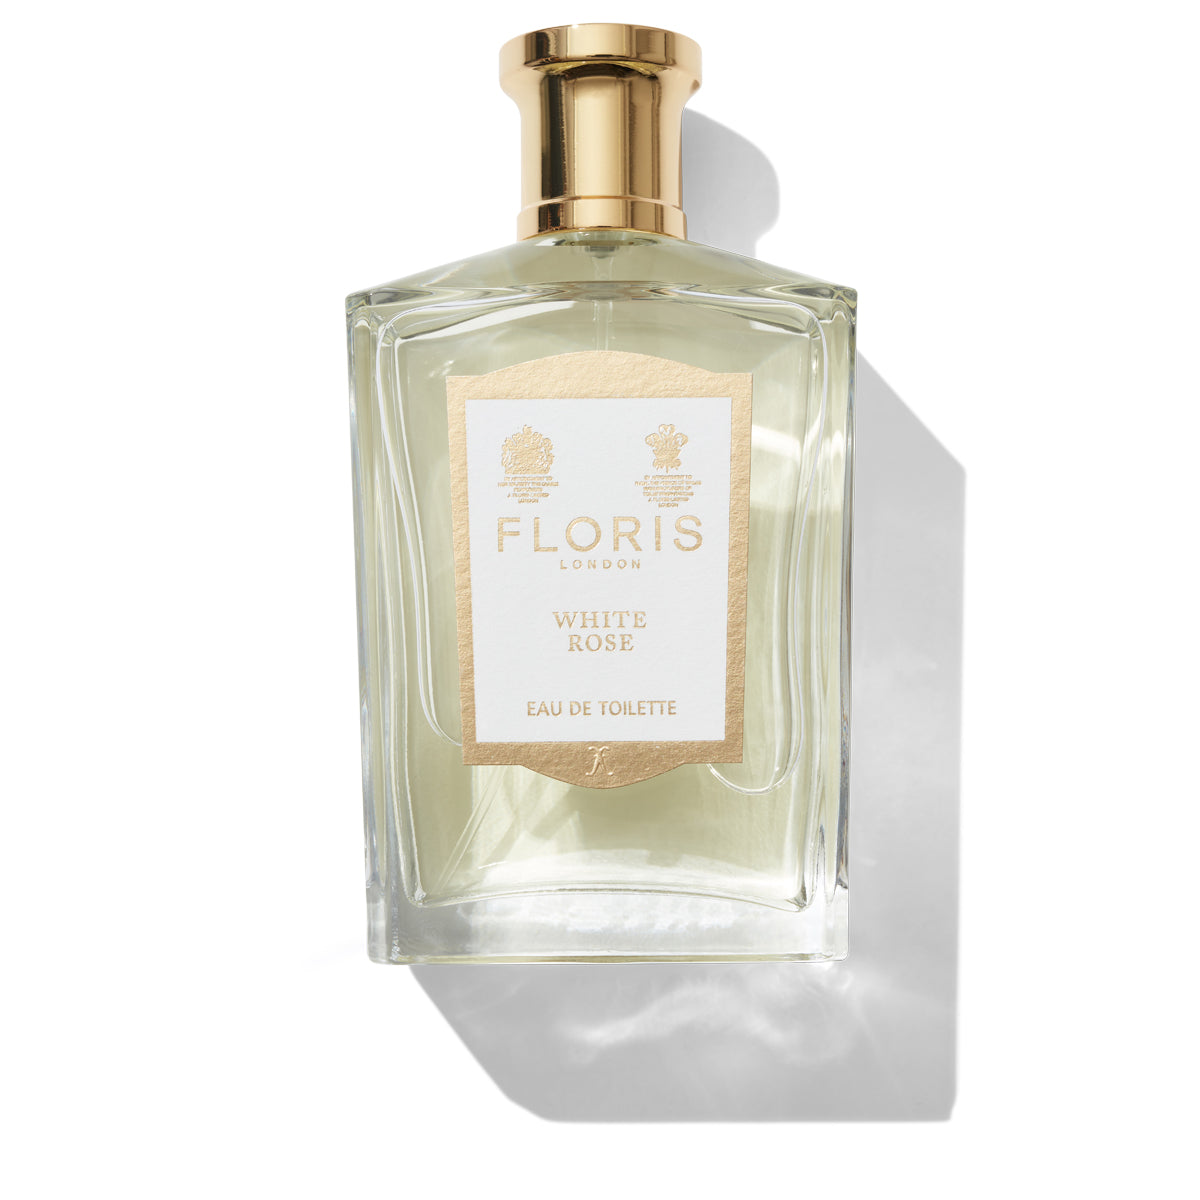 Elegant white gold modern trendy floral Water Bottle